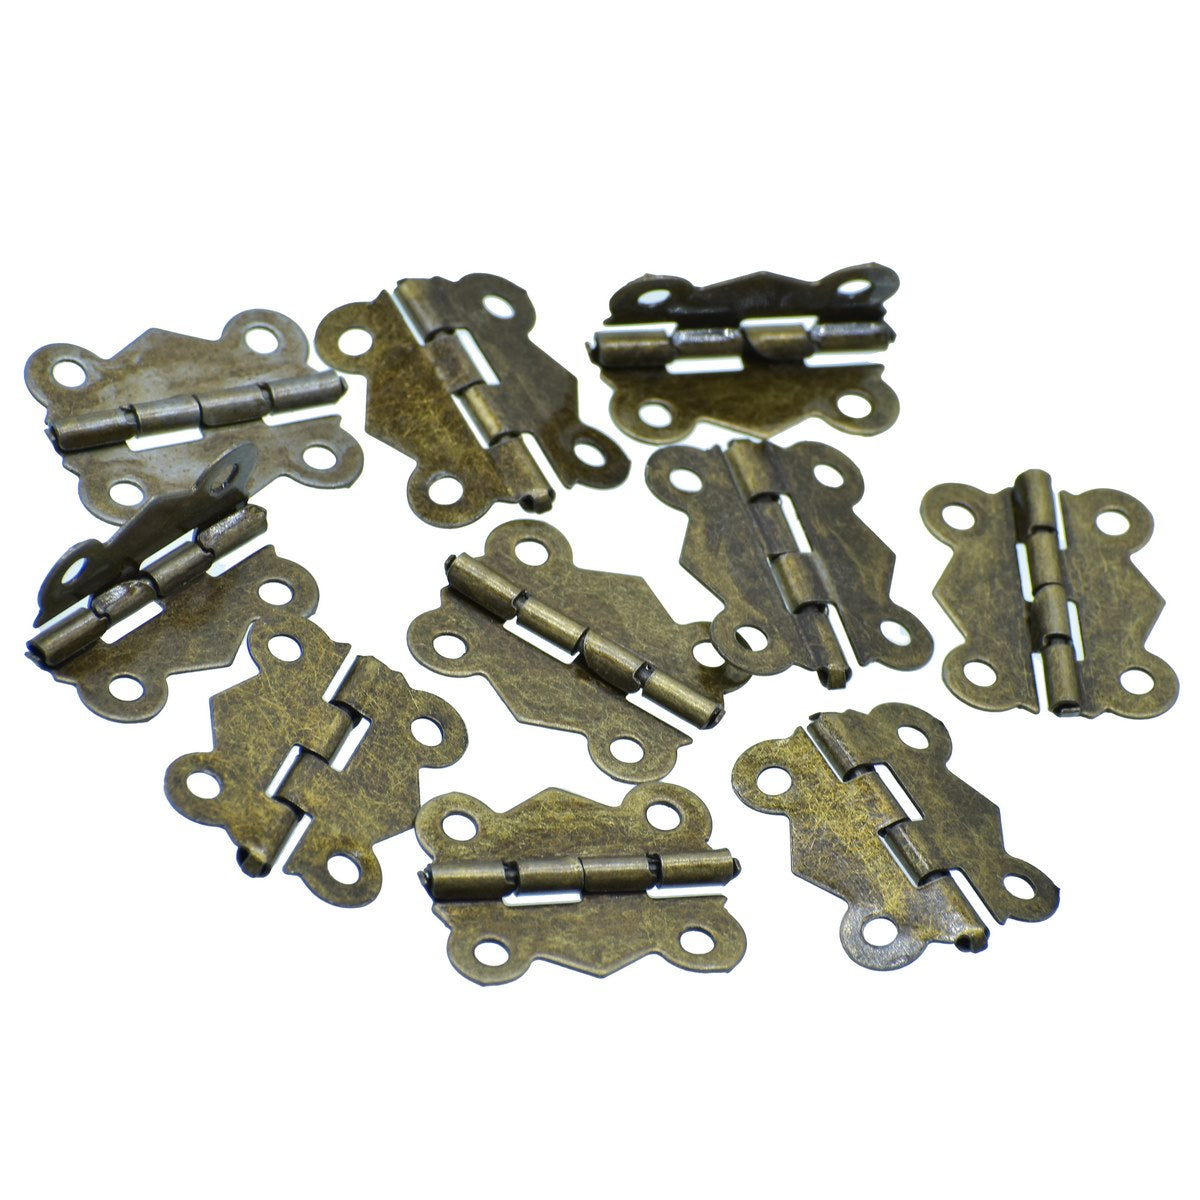 jags-mumbai Chains & Hooks Metal Fitting Hinges Fancy Medium 10 Pcs 19X25MM